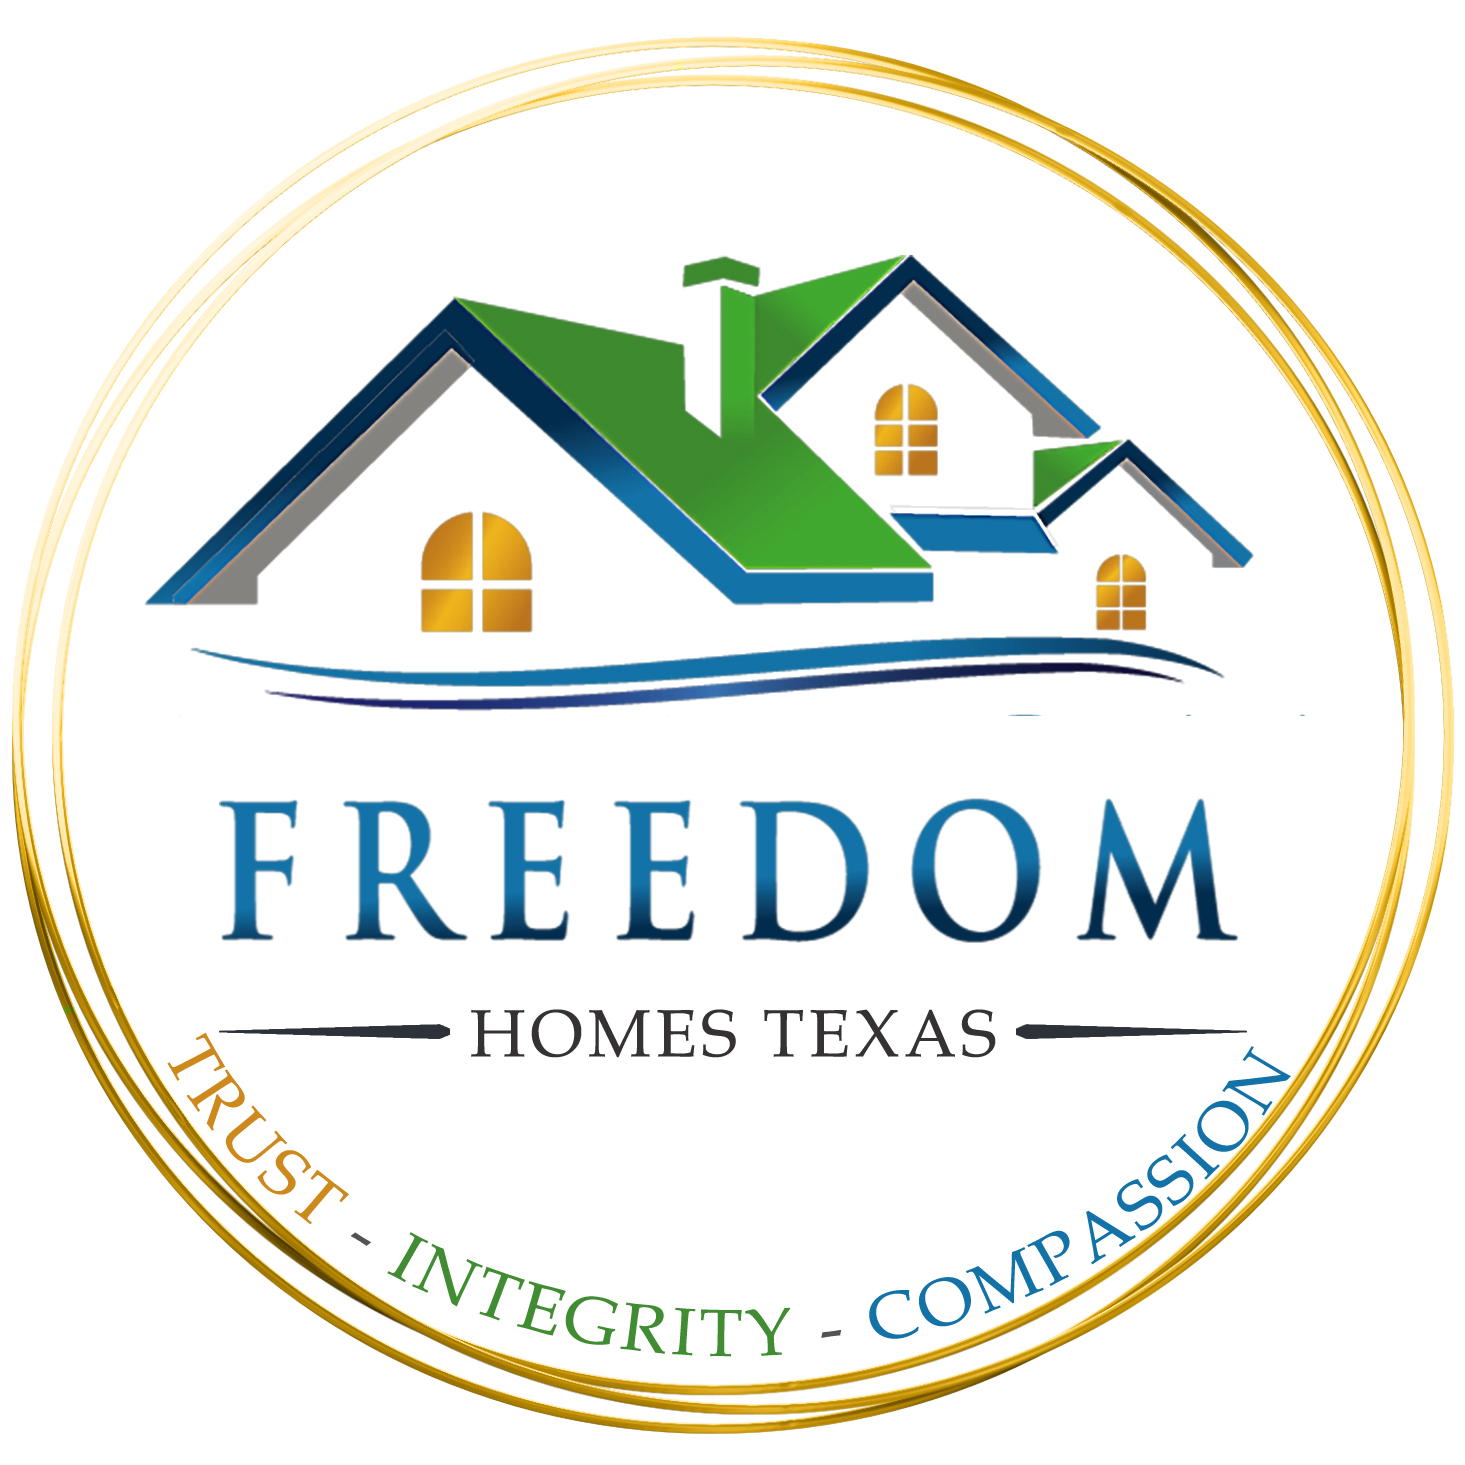 JCA Freedom Home Investors logo